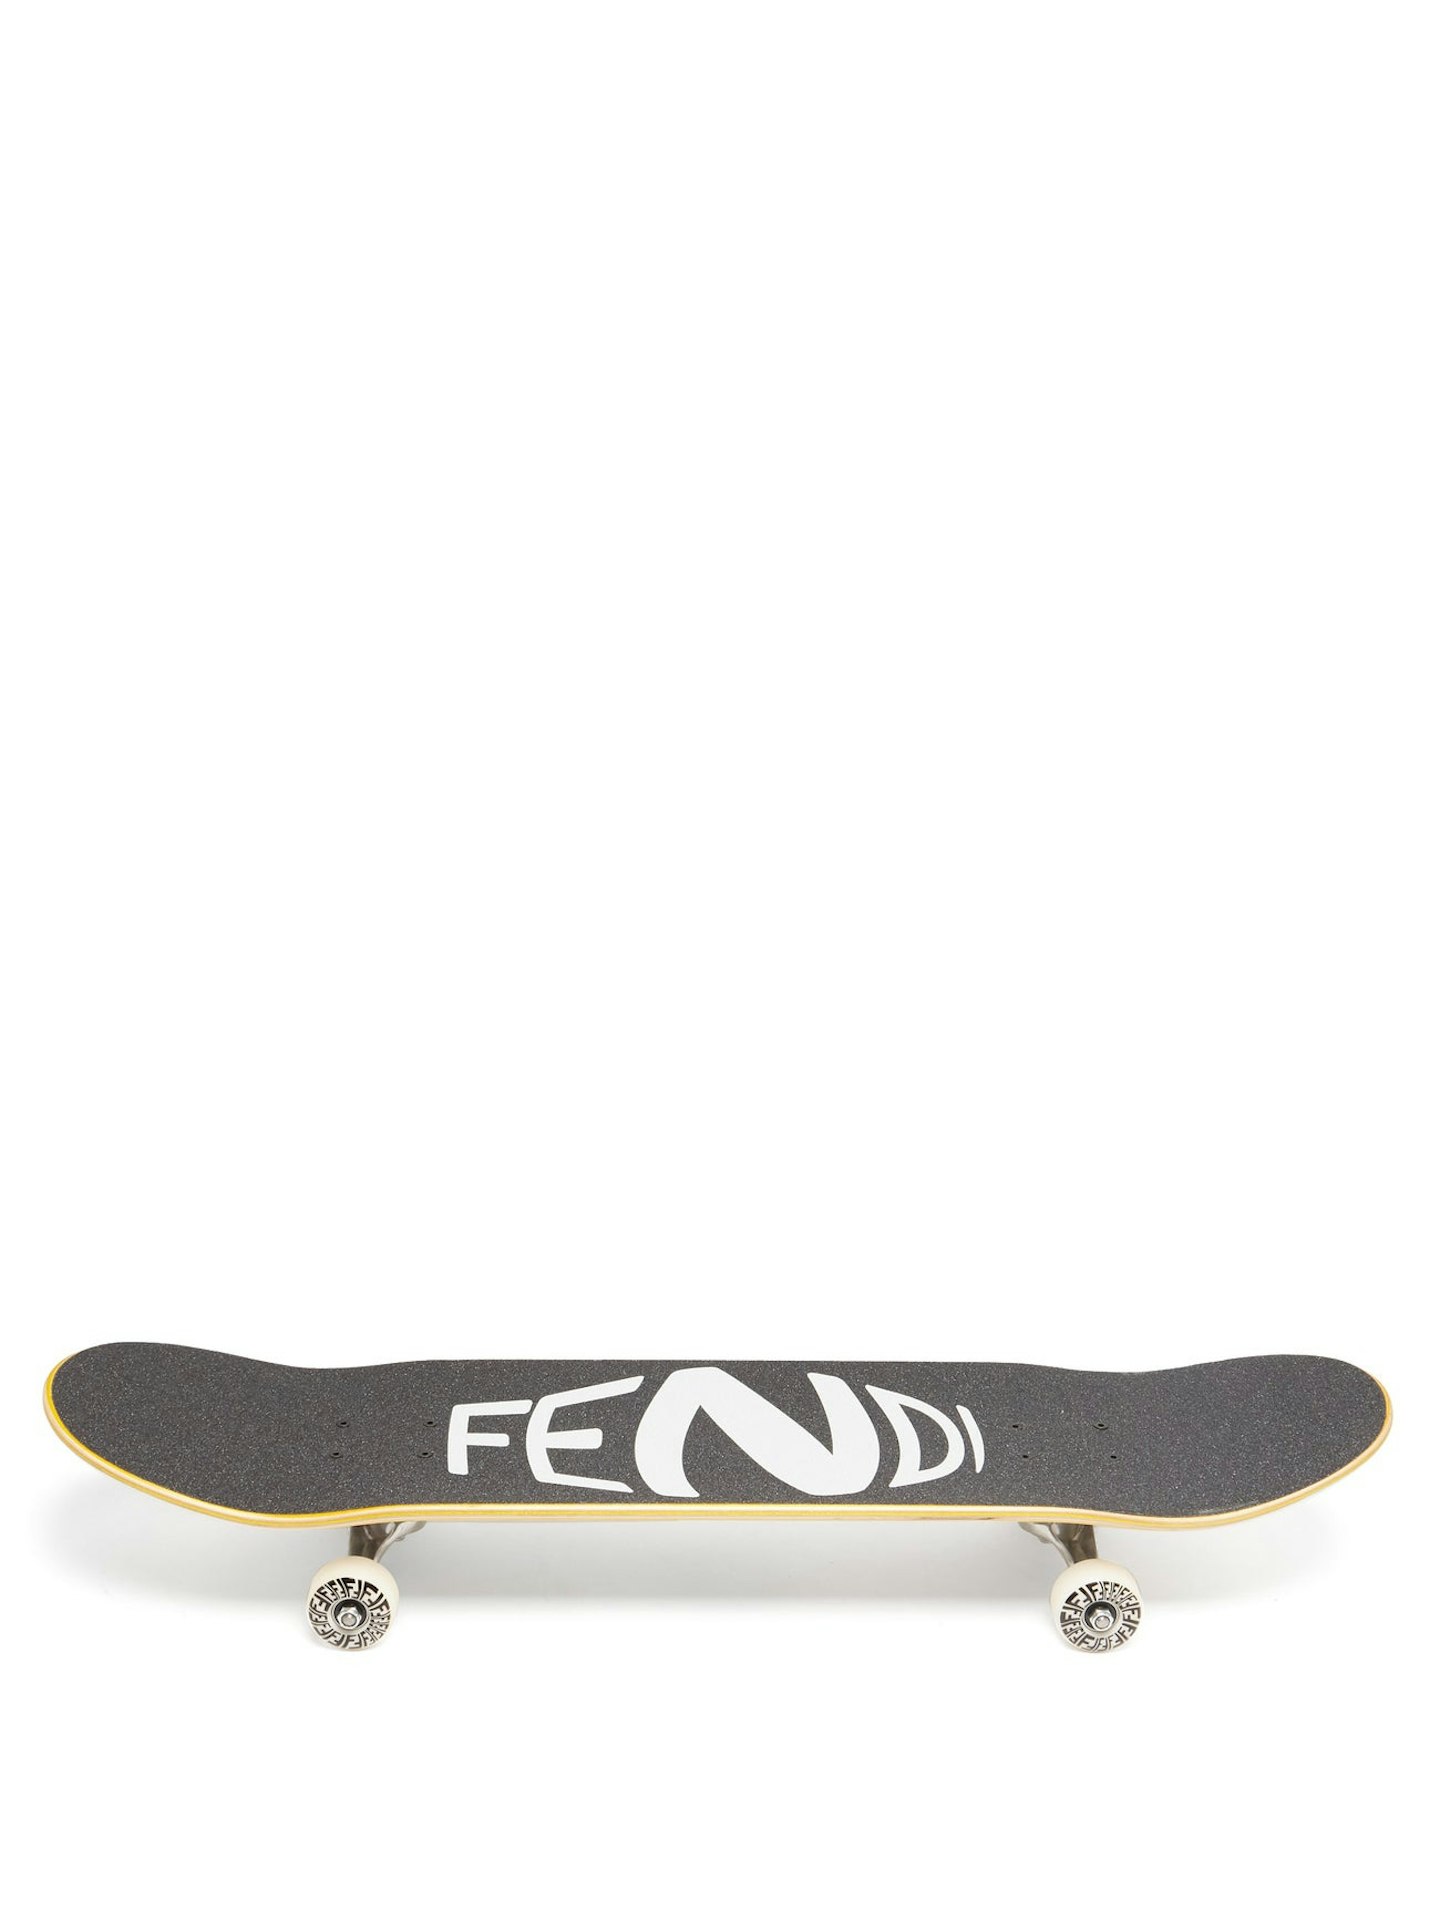 Fendi, Logo Print Skateboard, £980 at Matchesfashion